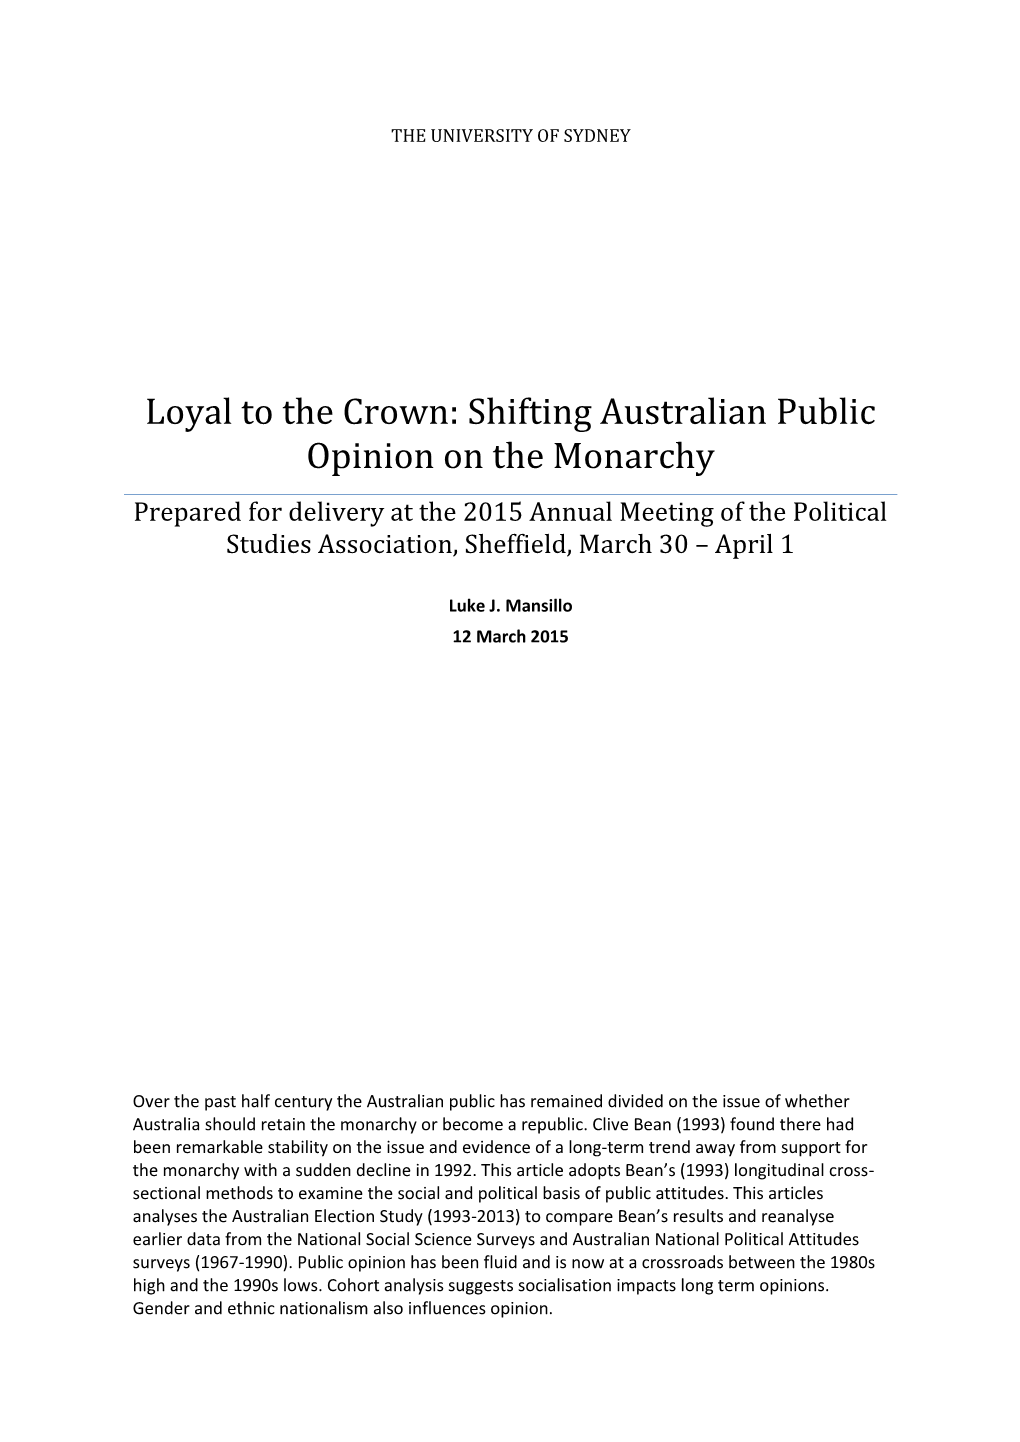 Loyal to the Crown: Shifting Australian